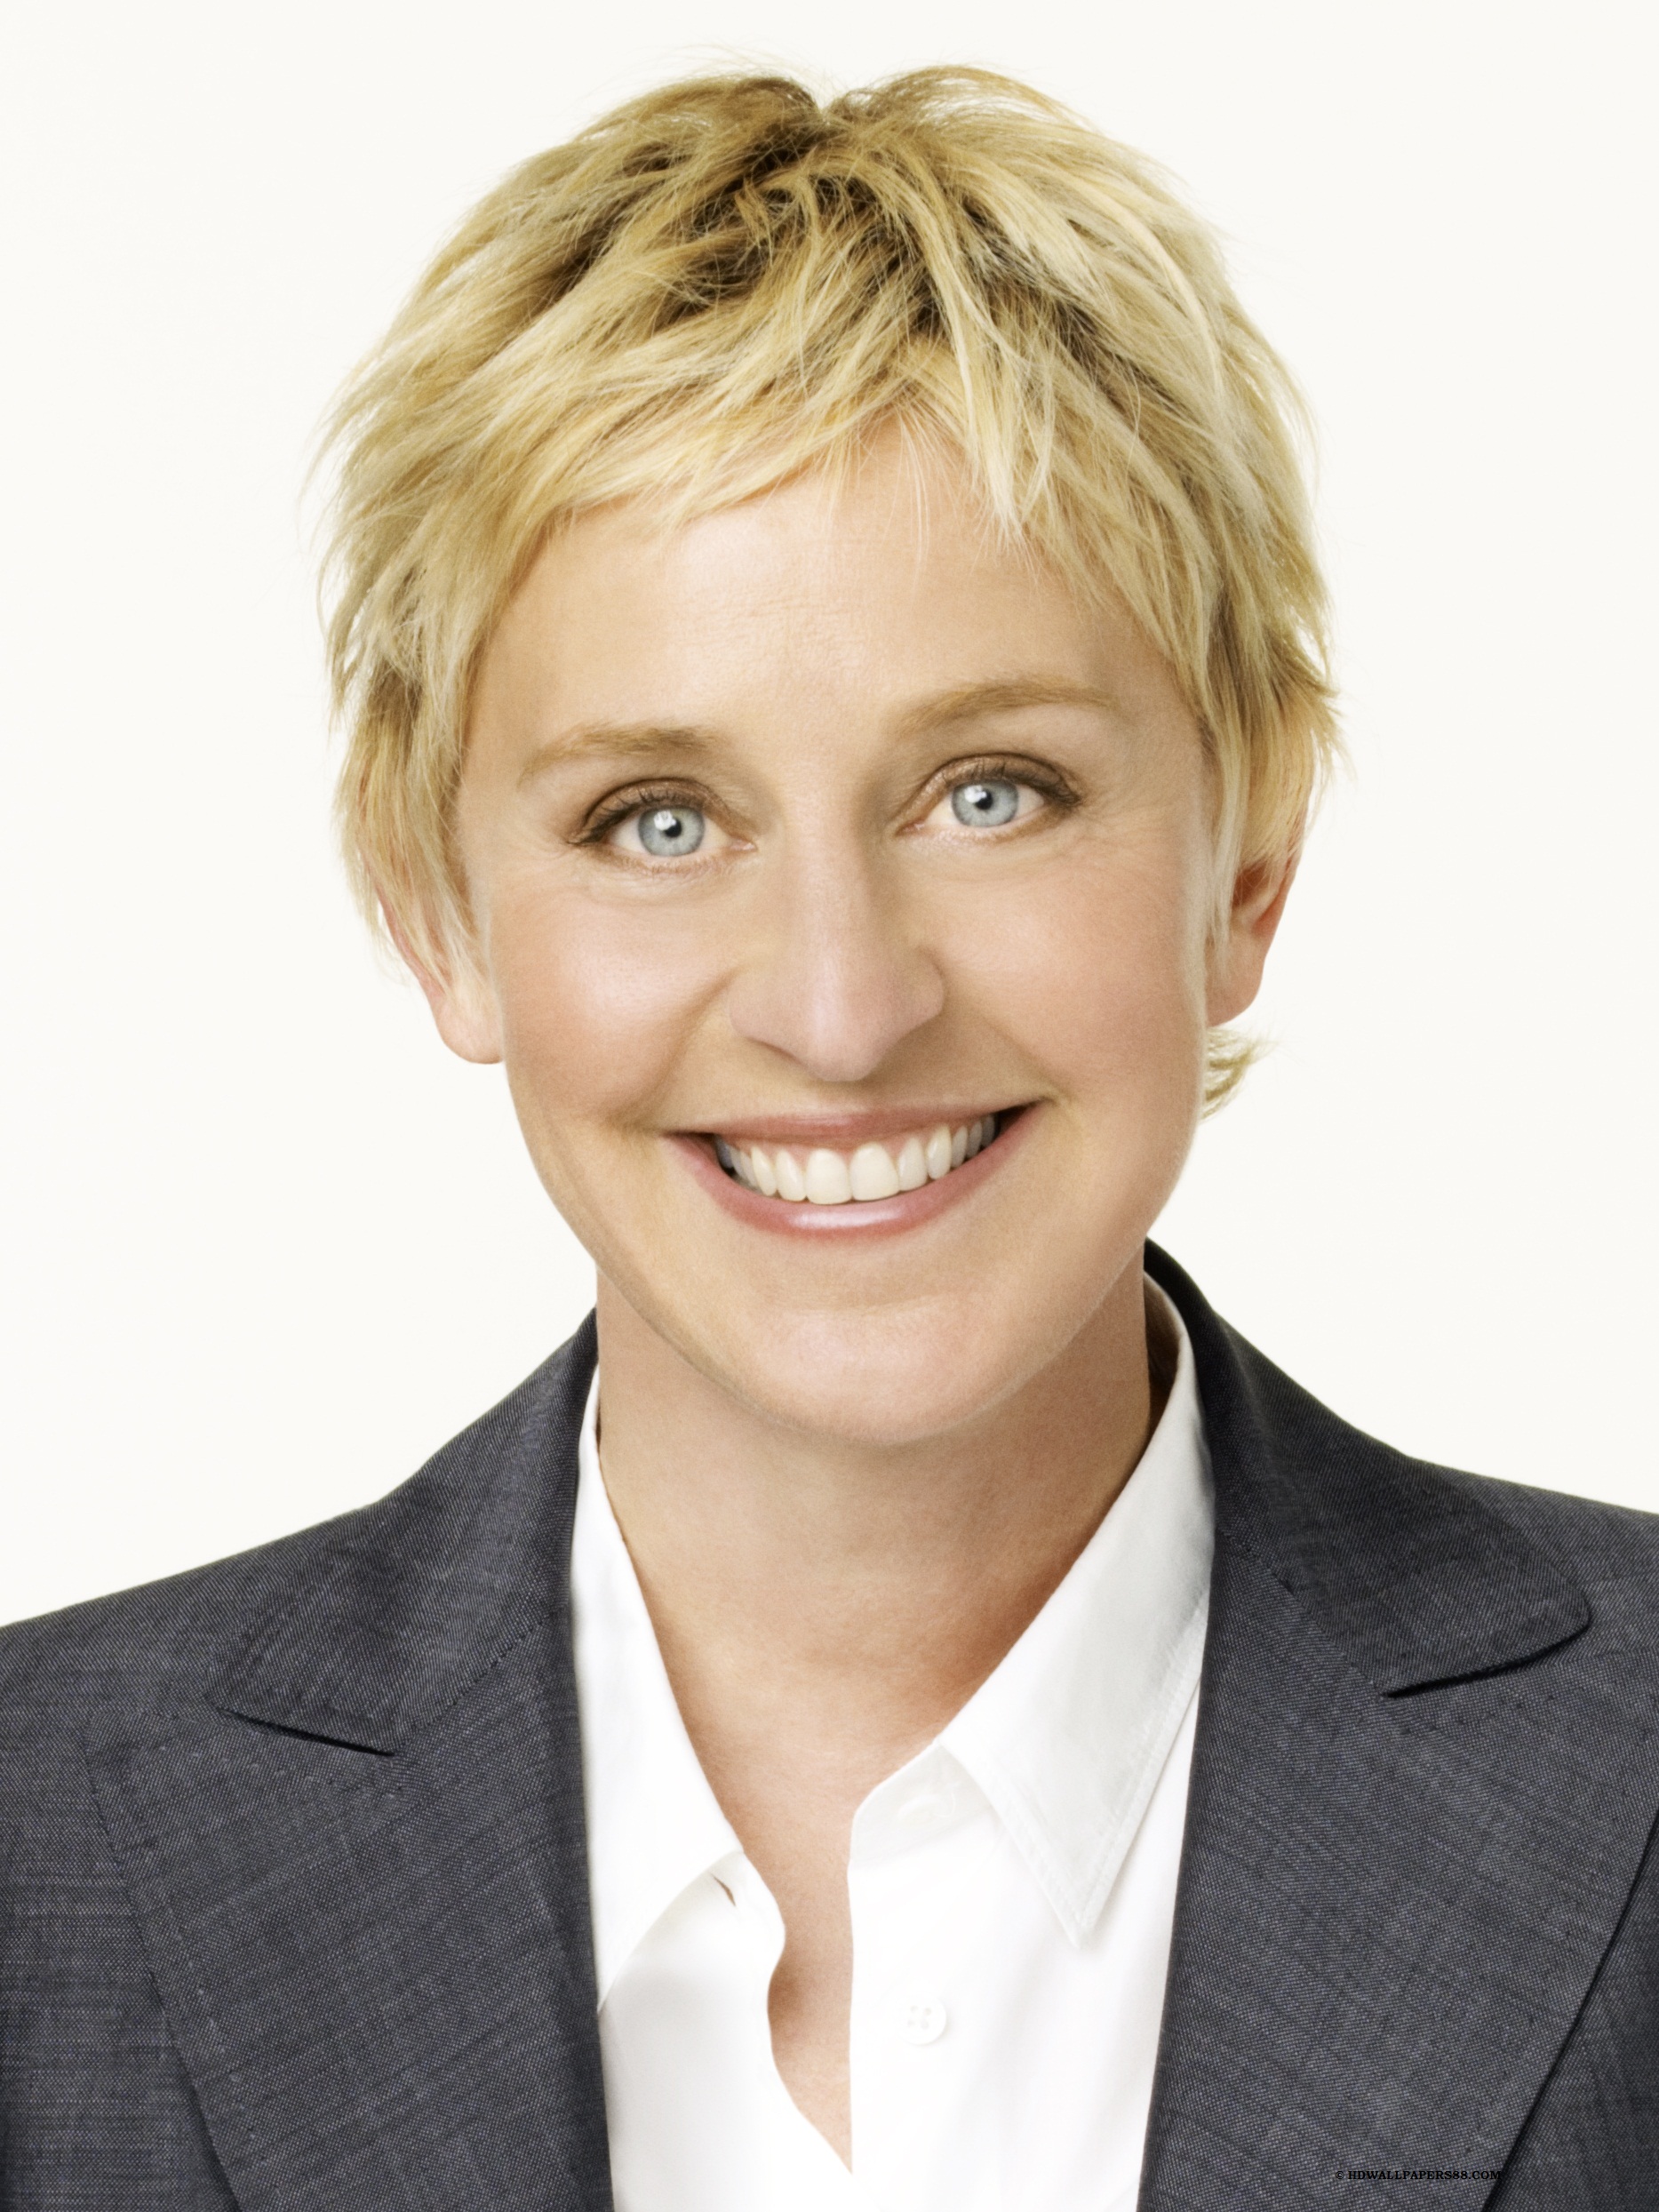 American Edian Tv Host Actress Writer And Producer Ellen